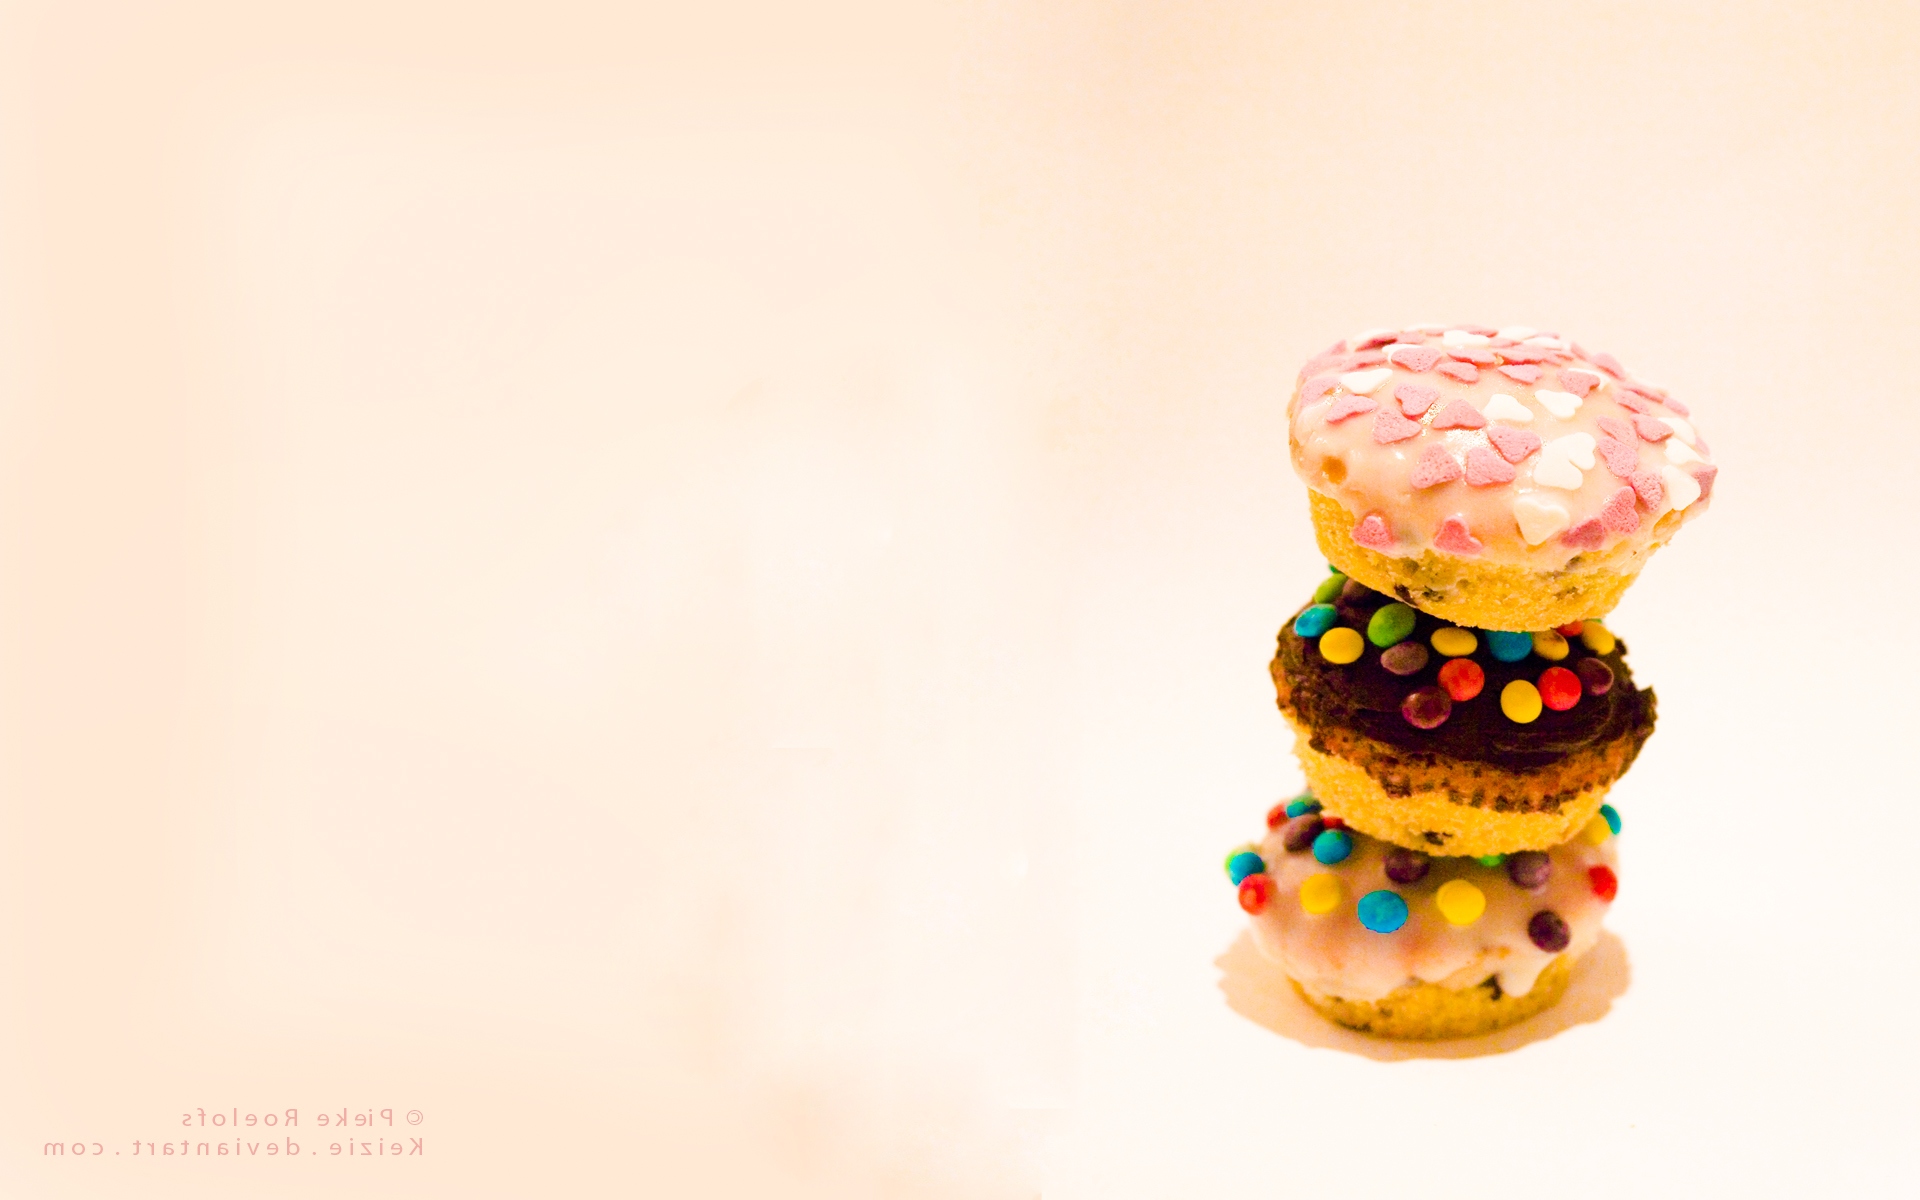 cupcakes, sweets (candies), desserts, candies - desktop wallpaper